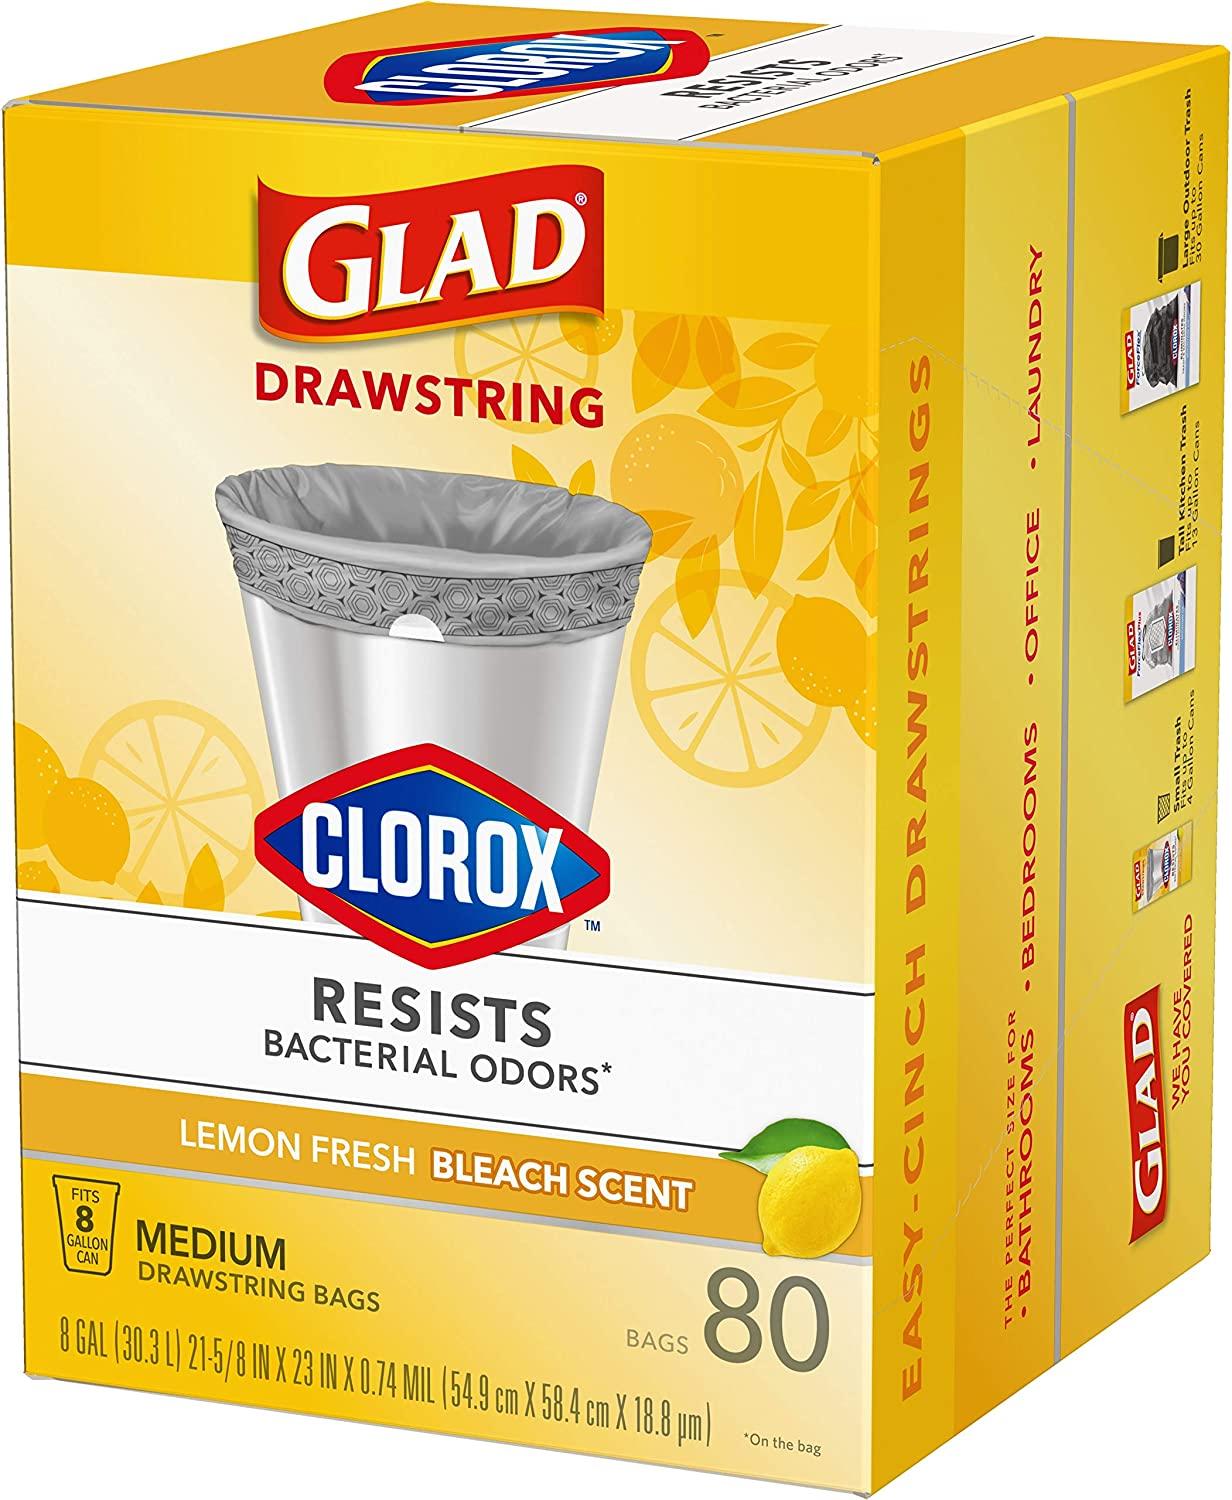 Save on Glad Clorox Lemon Fresh Bleach Scent Medium Drawstring Bags 8  Gallon Order Online Delivery